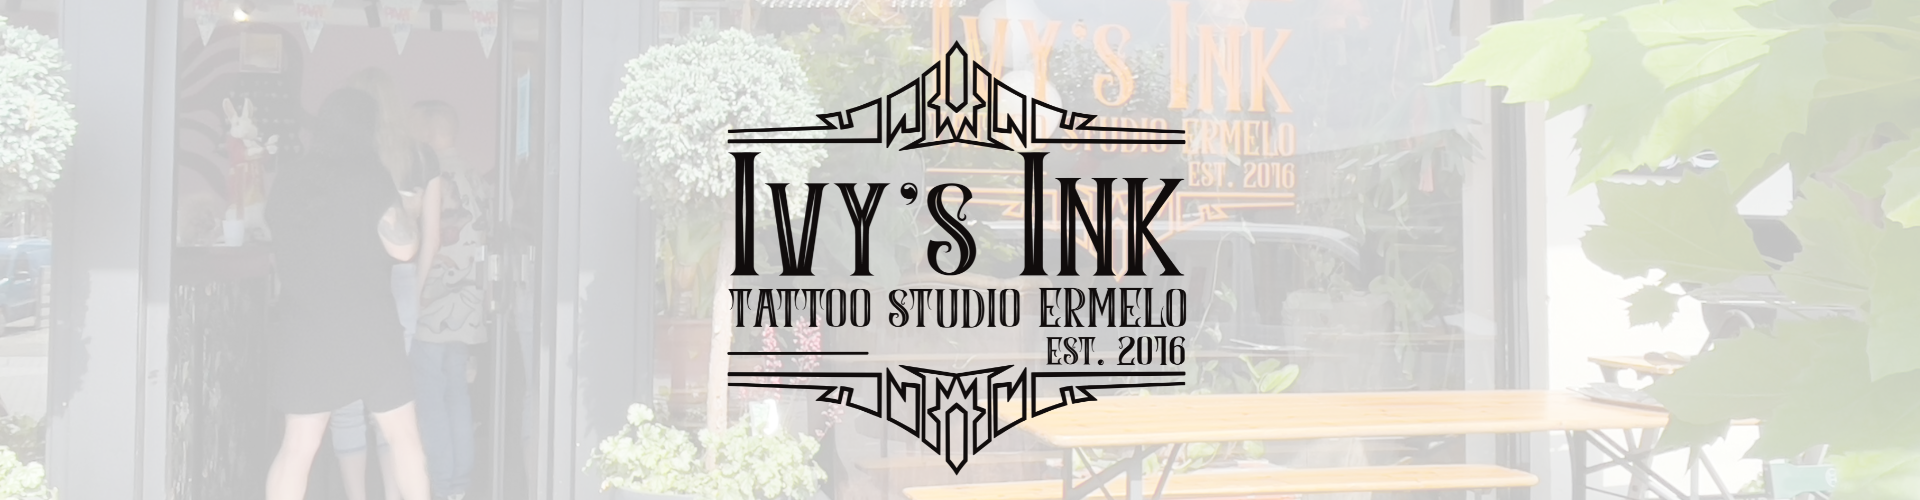 tattoo shop ermelo ivys ink